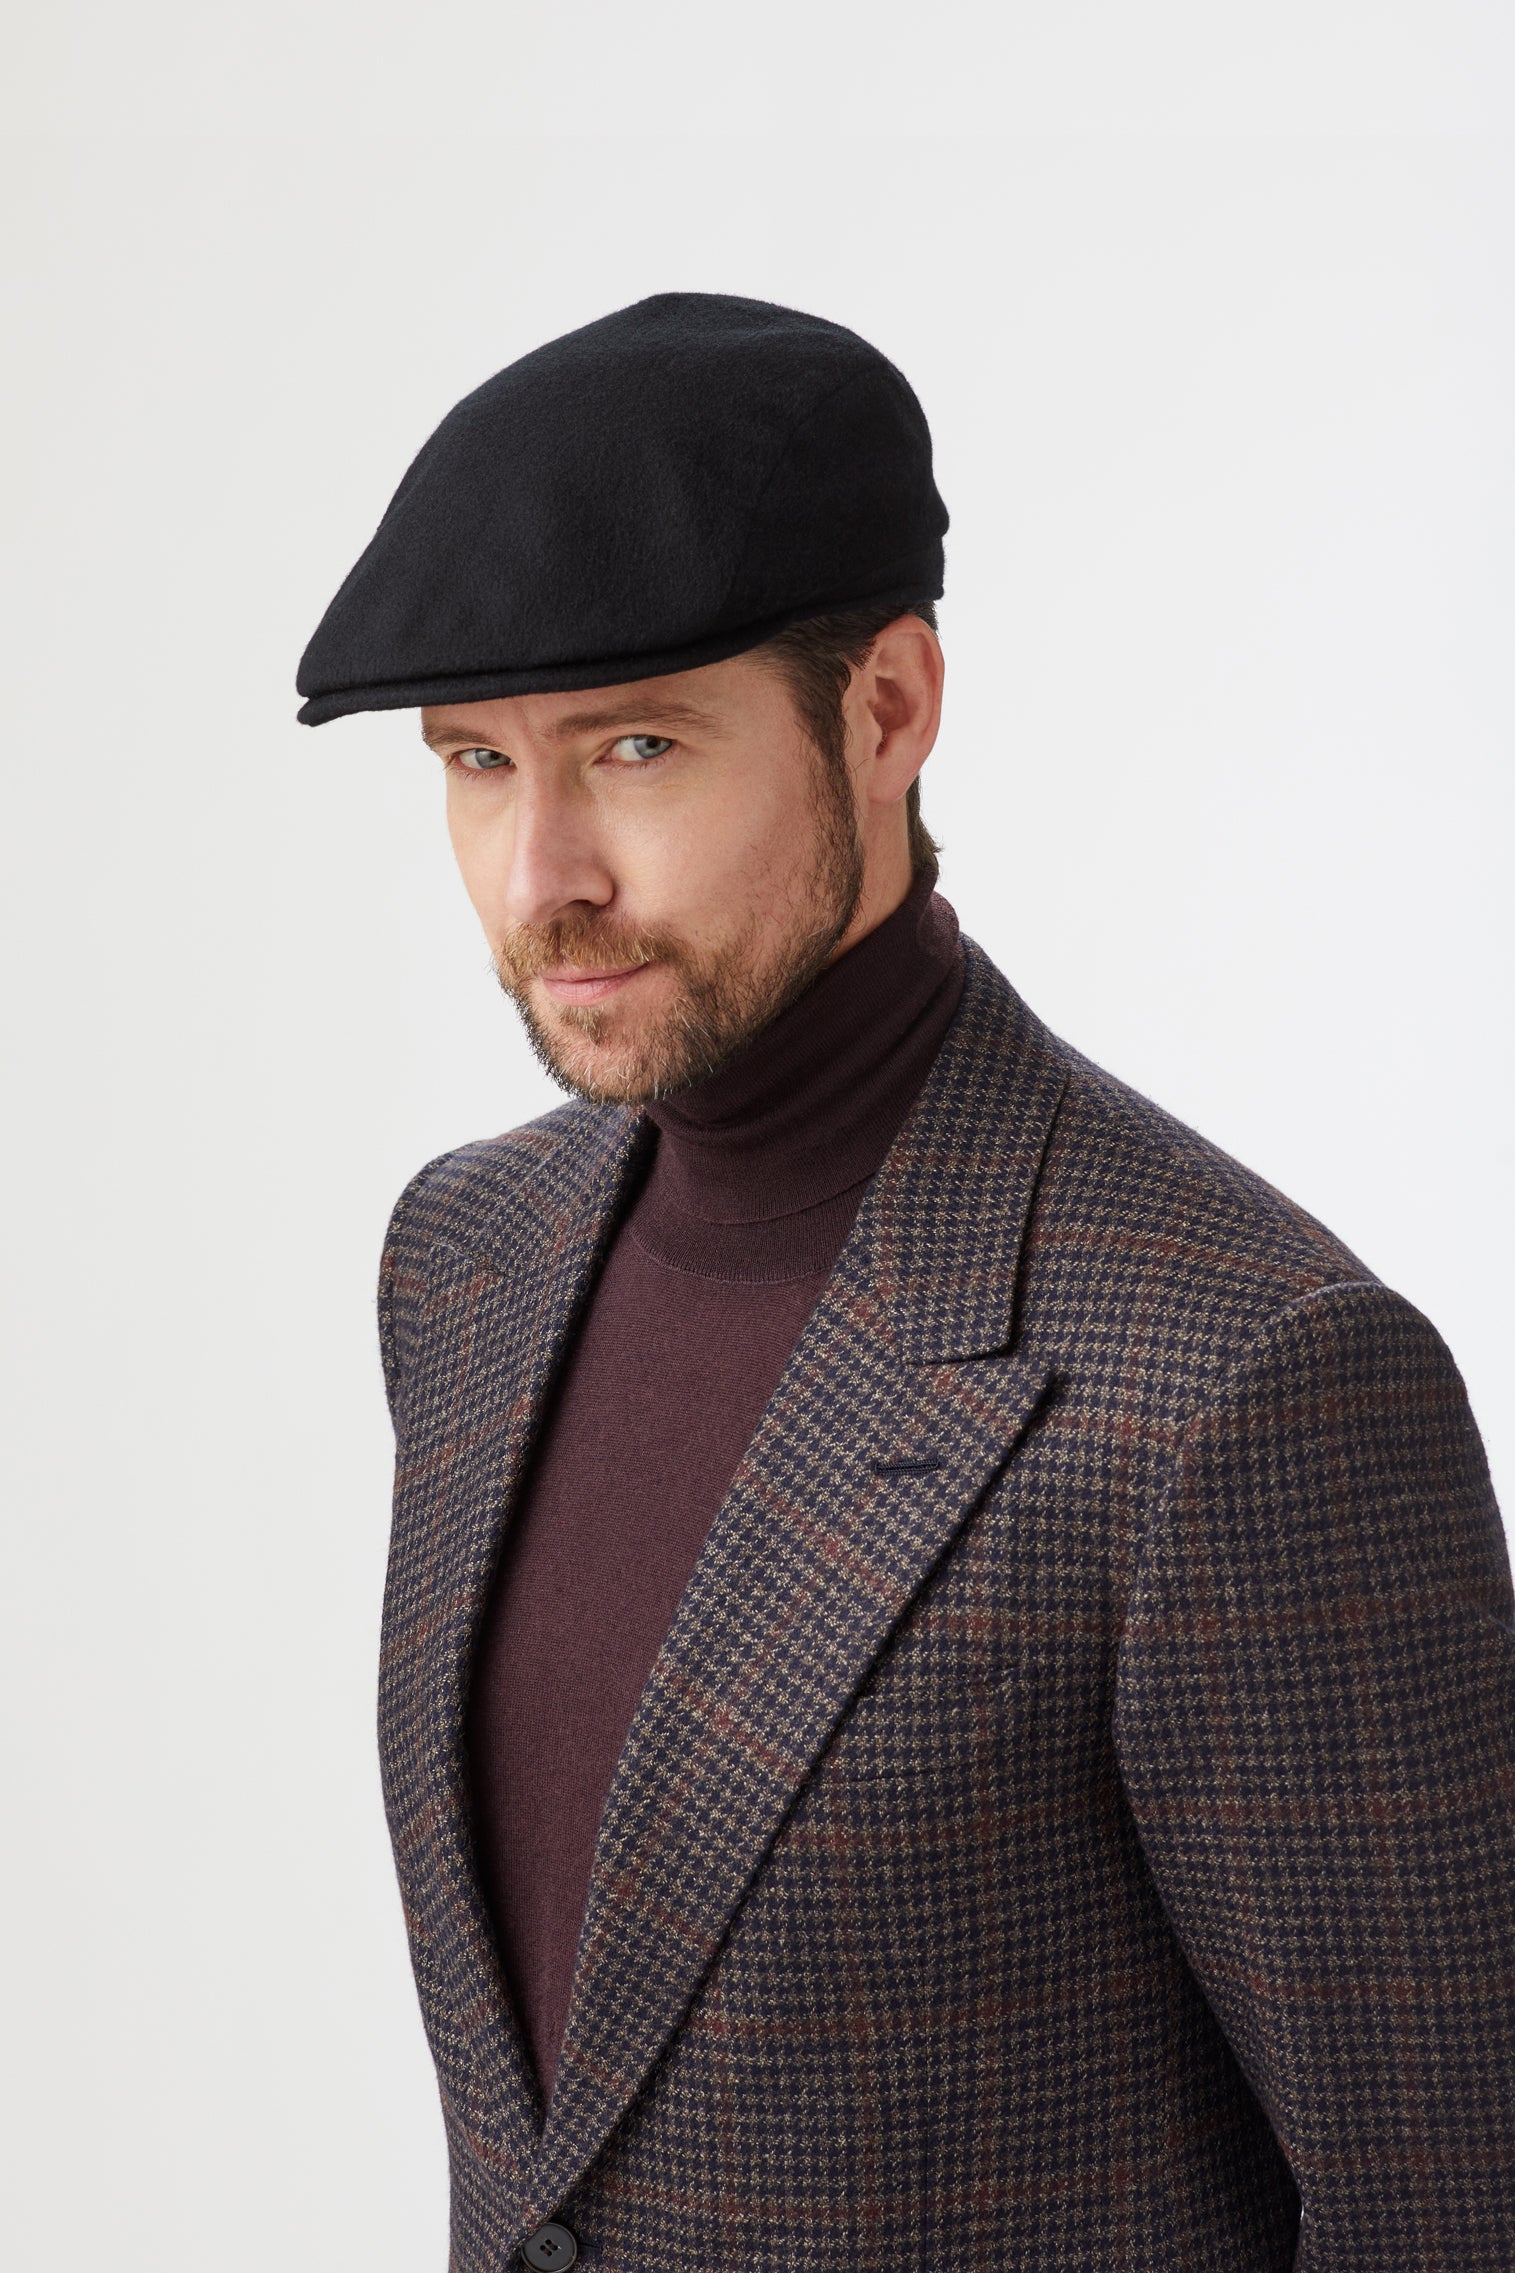 Escorial Wool Berkeley Flat Cap - Men's Hats - Lock & Co. Hatters London UK